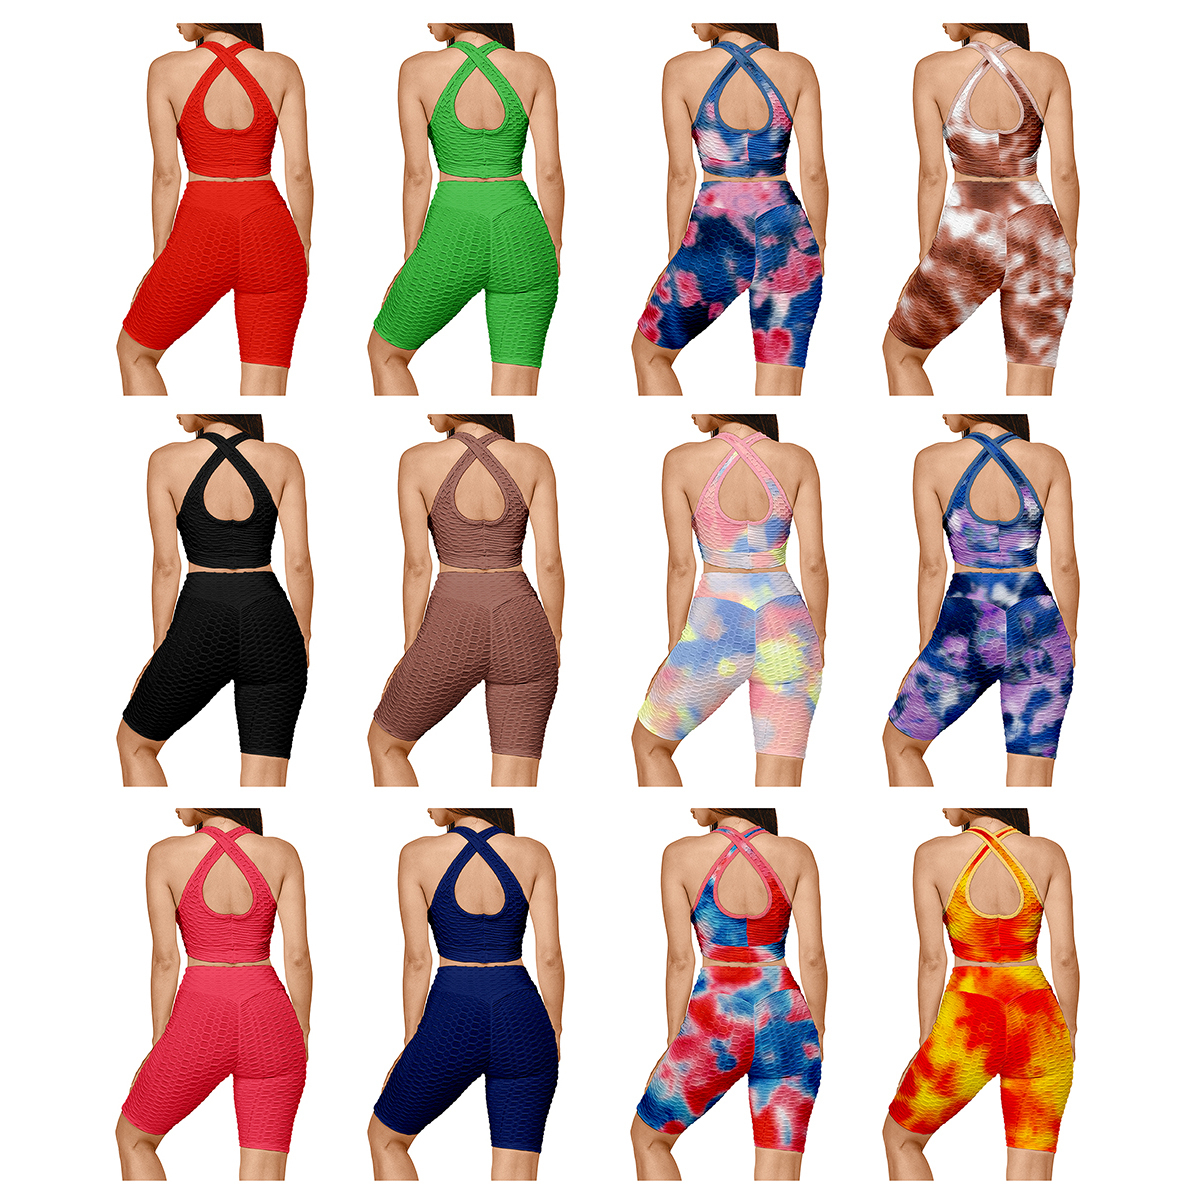 4-Piece Women's Anti Cellulite Sports Bra & High Waisted Biker Shorts Workout Yoga Set - Tie-Dye, Large